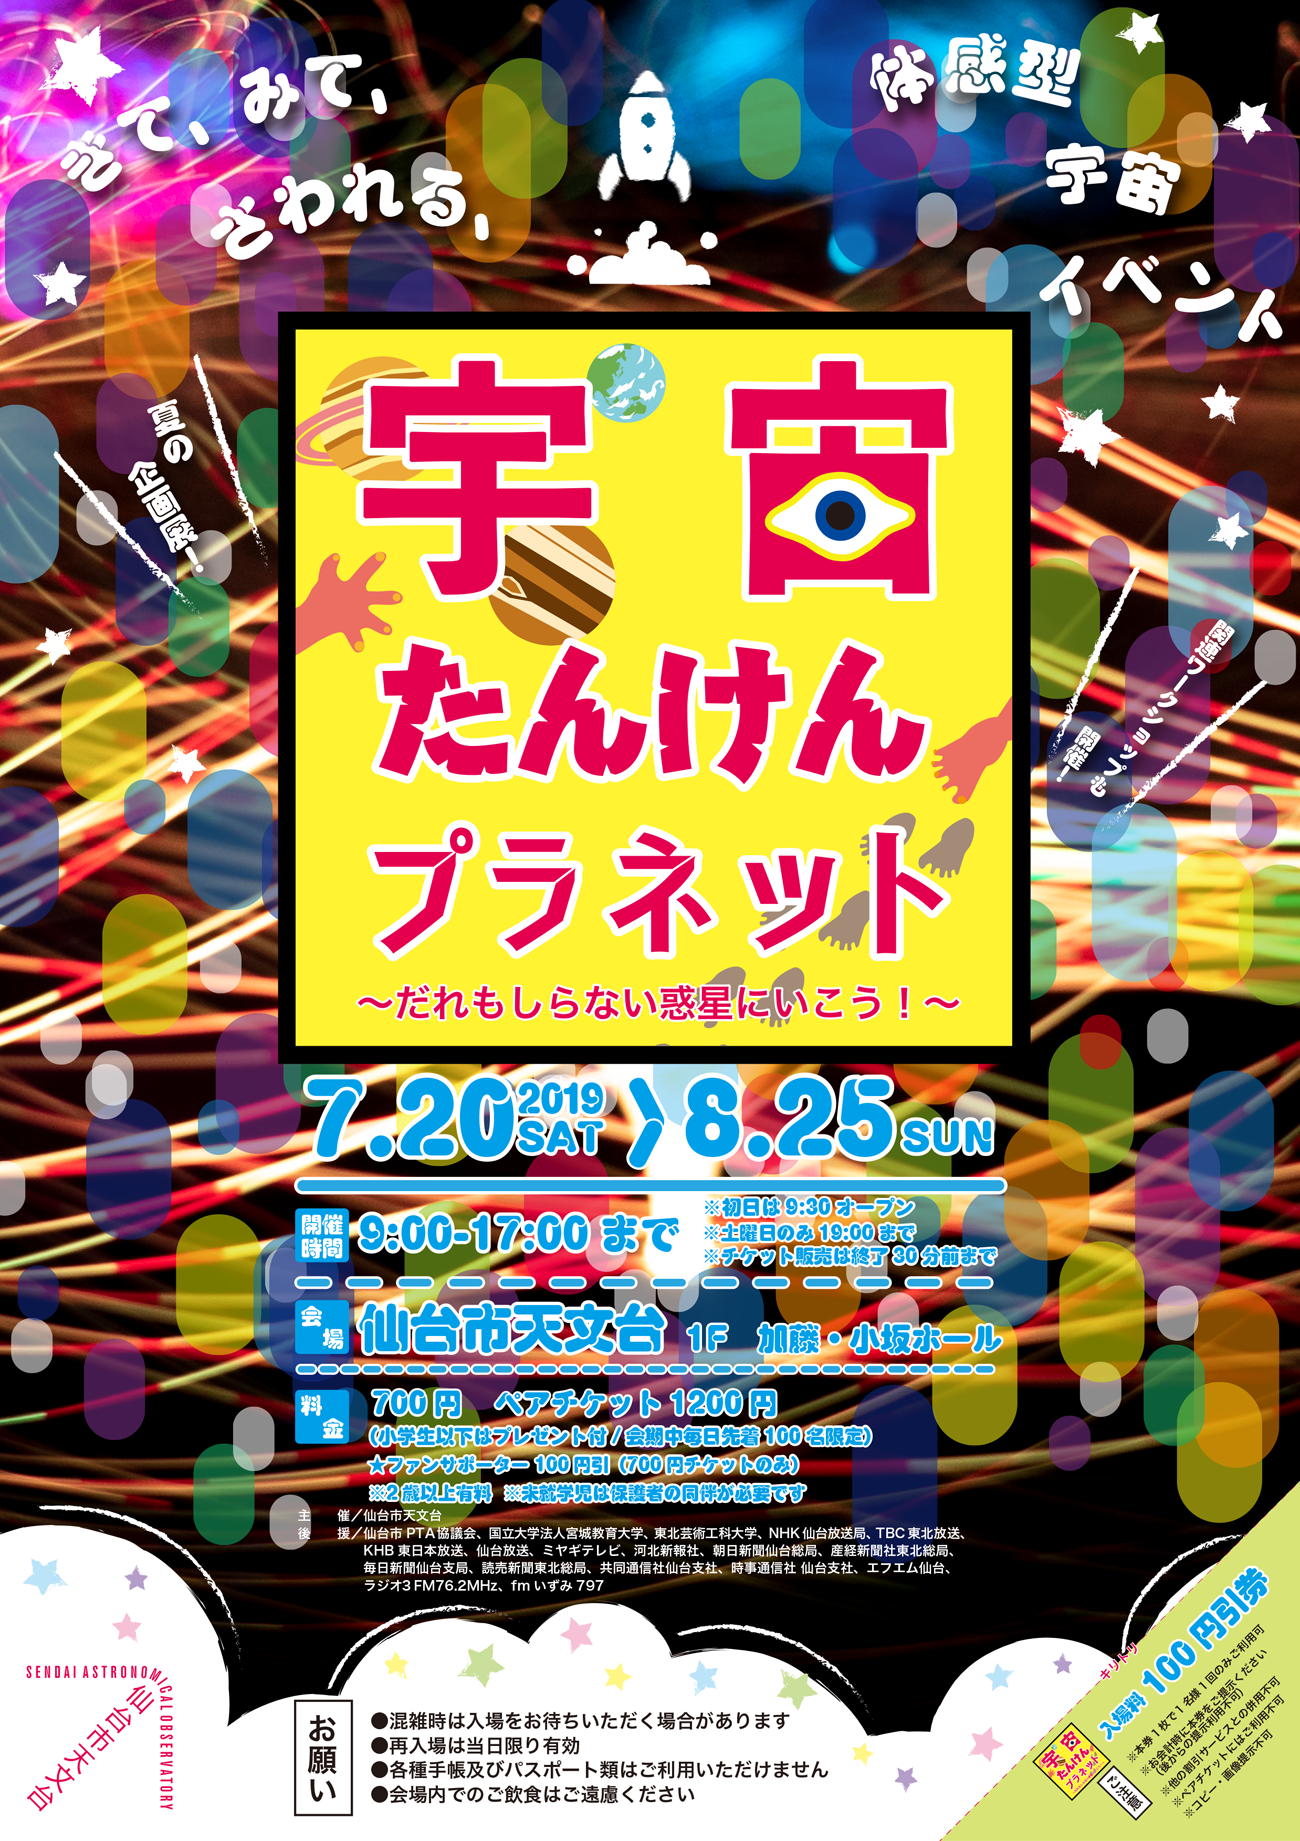 http://www.sendai-astro.jp/event/2019/event_kikakuten2019_01.png